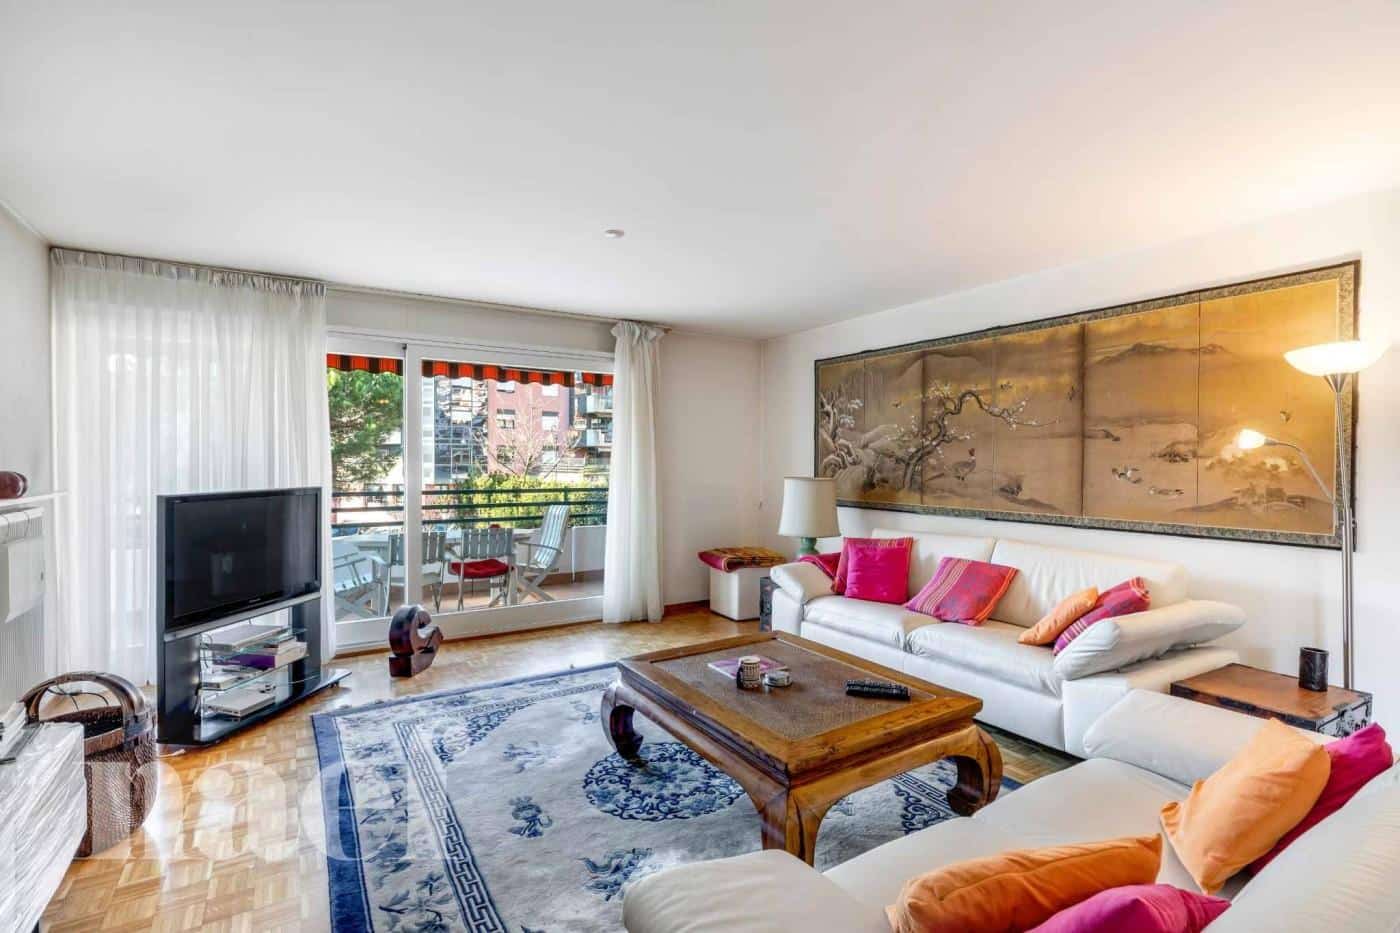 À vendre : Appartement 3 chambres Clarens / Montreux - Ref : 39099 | Naef Immobilier